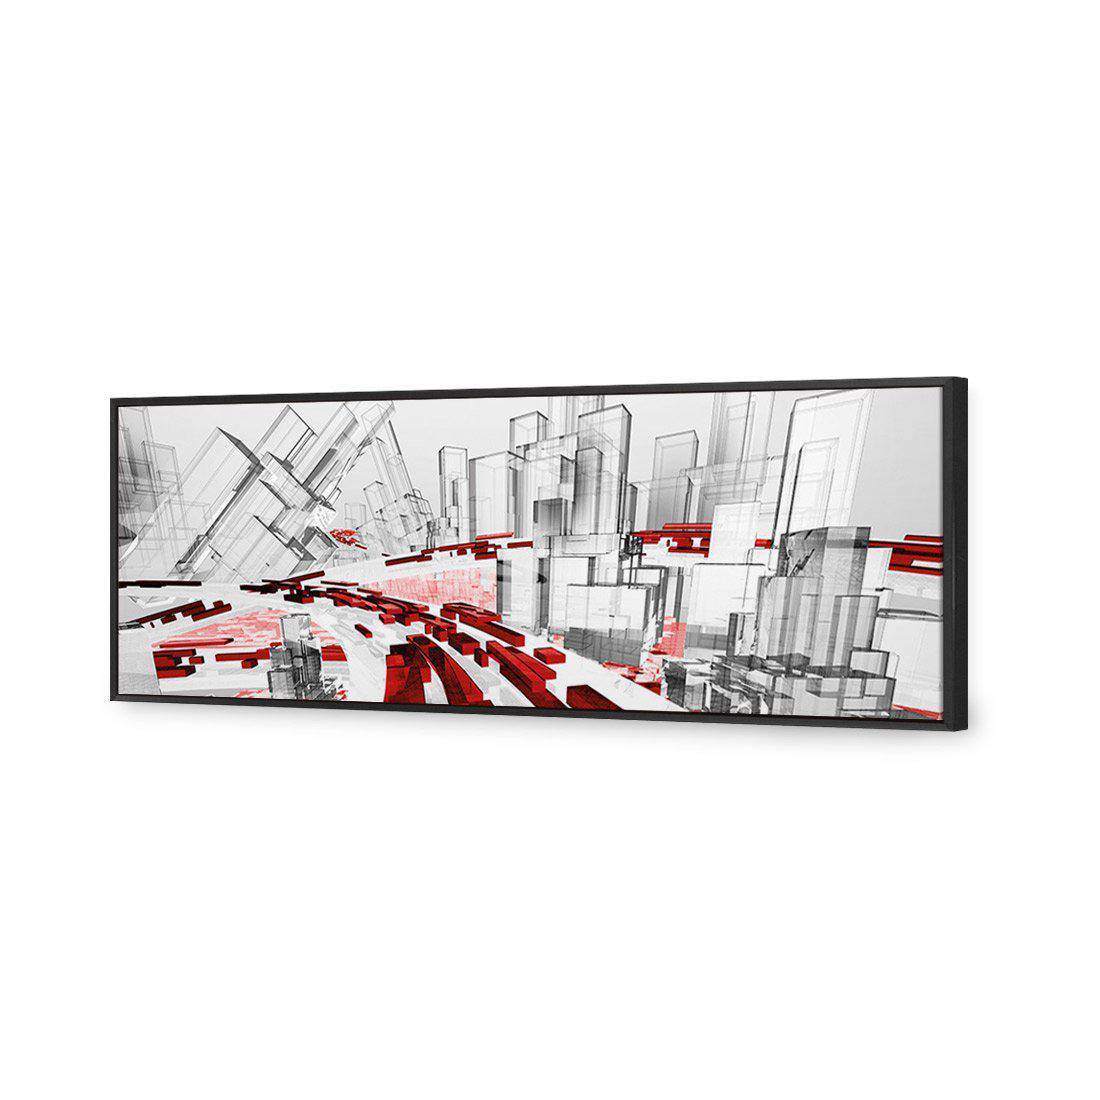 Passing Traffic Canvas Art-Canvas-Wall Art Designs-60x20cm-Canvas - Black Frame-Wall Art Designs